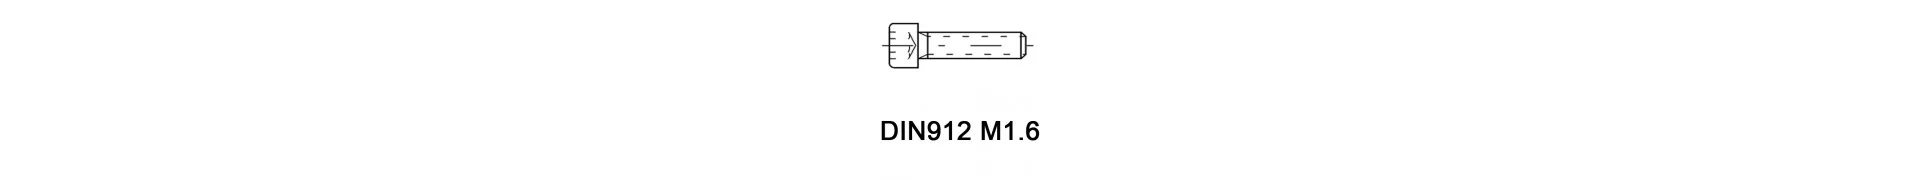 DIN912 M1.6